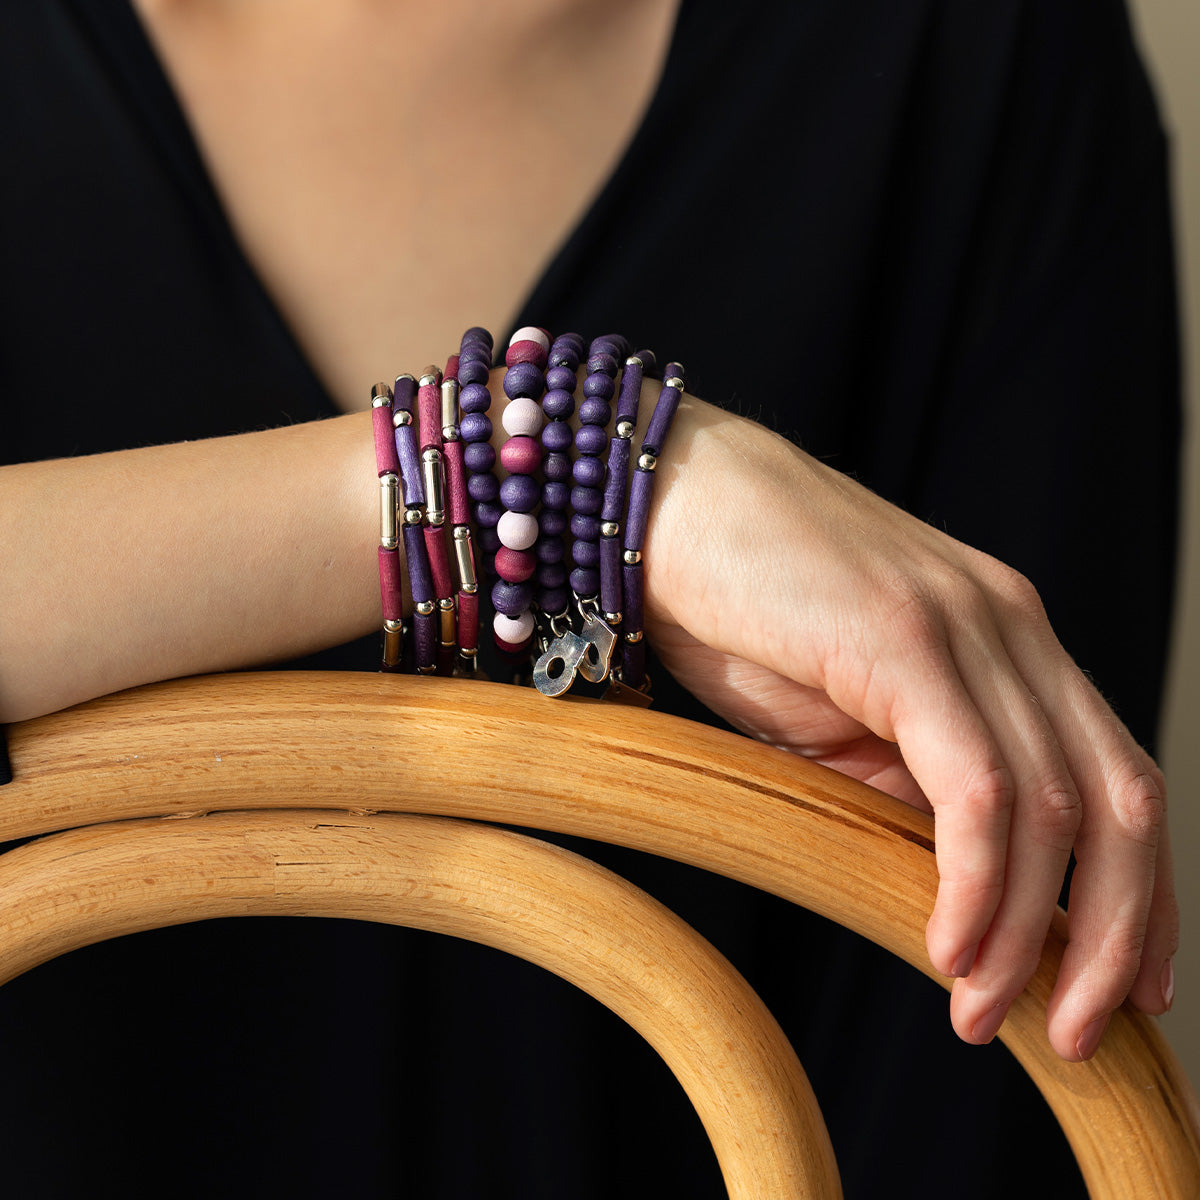 Hento bracelet, dark purple